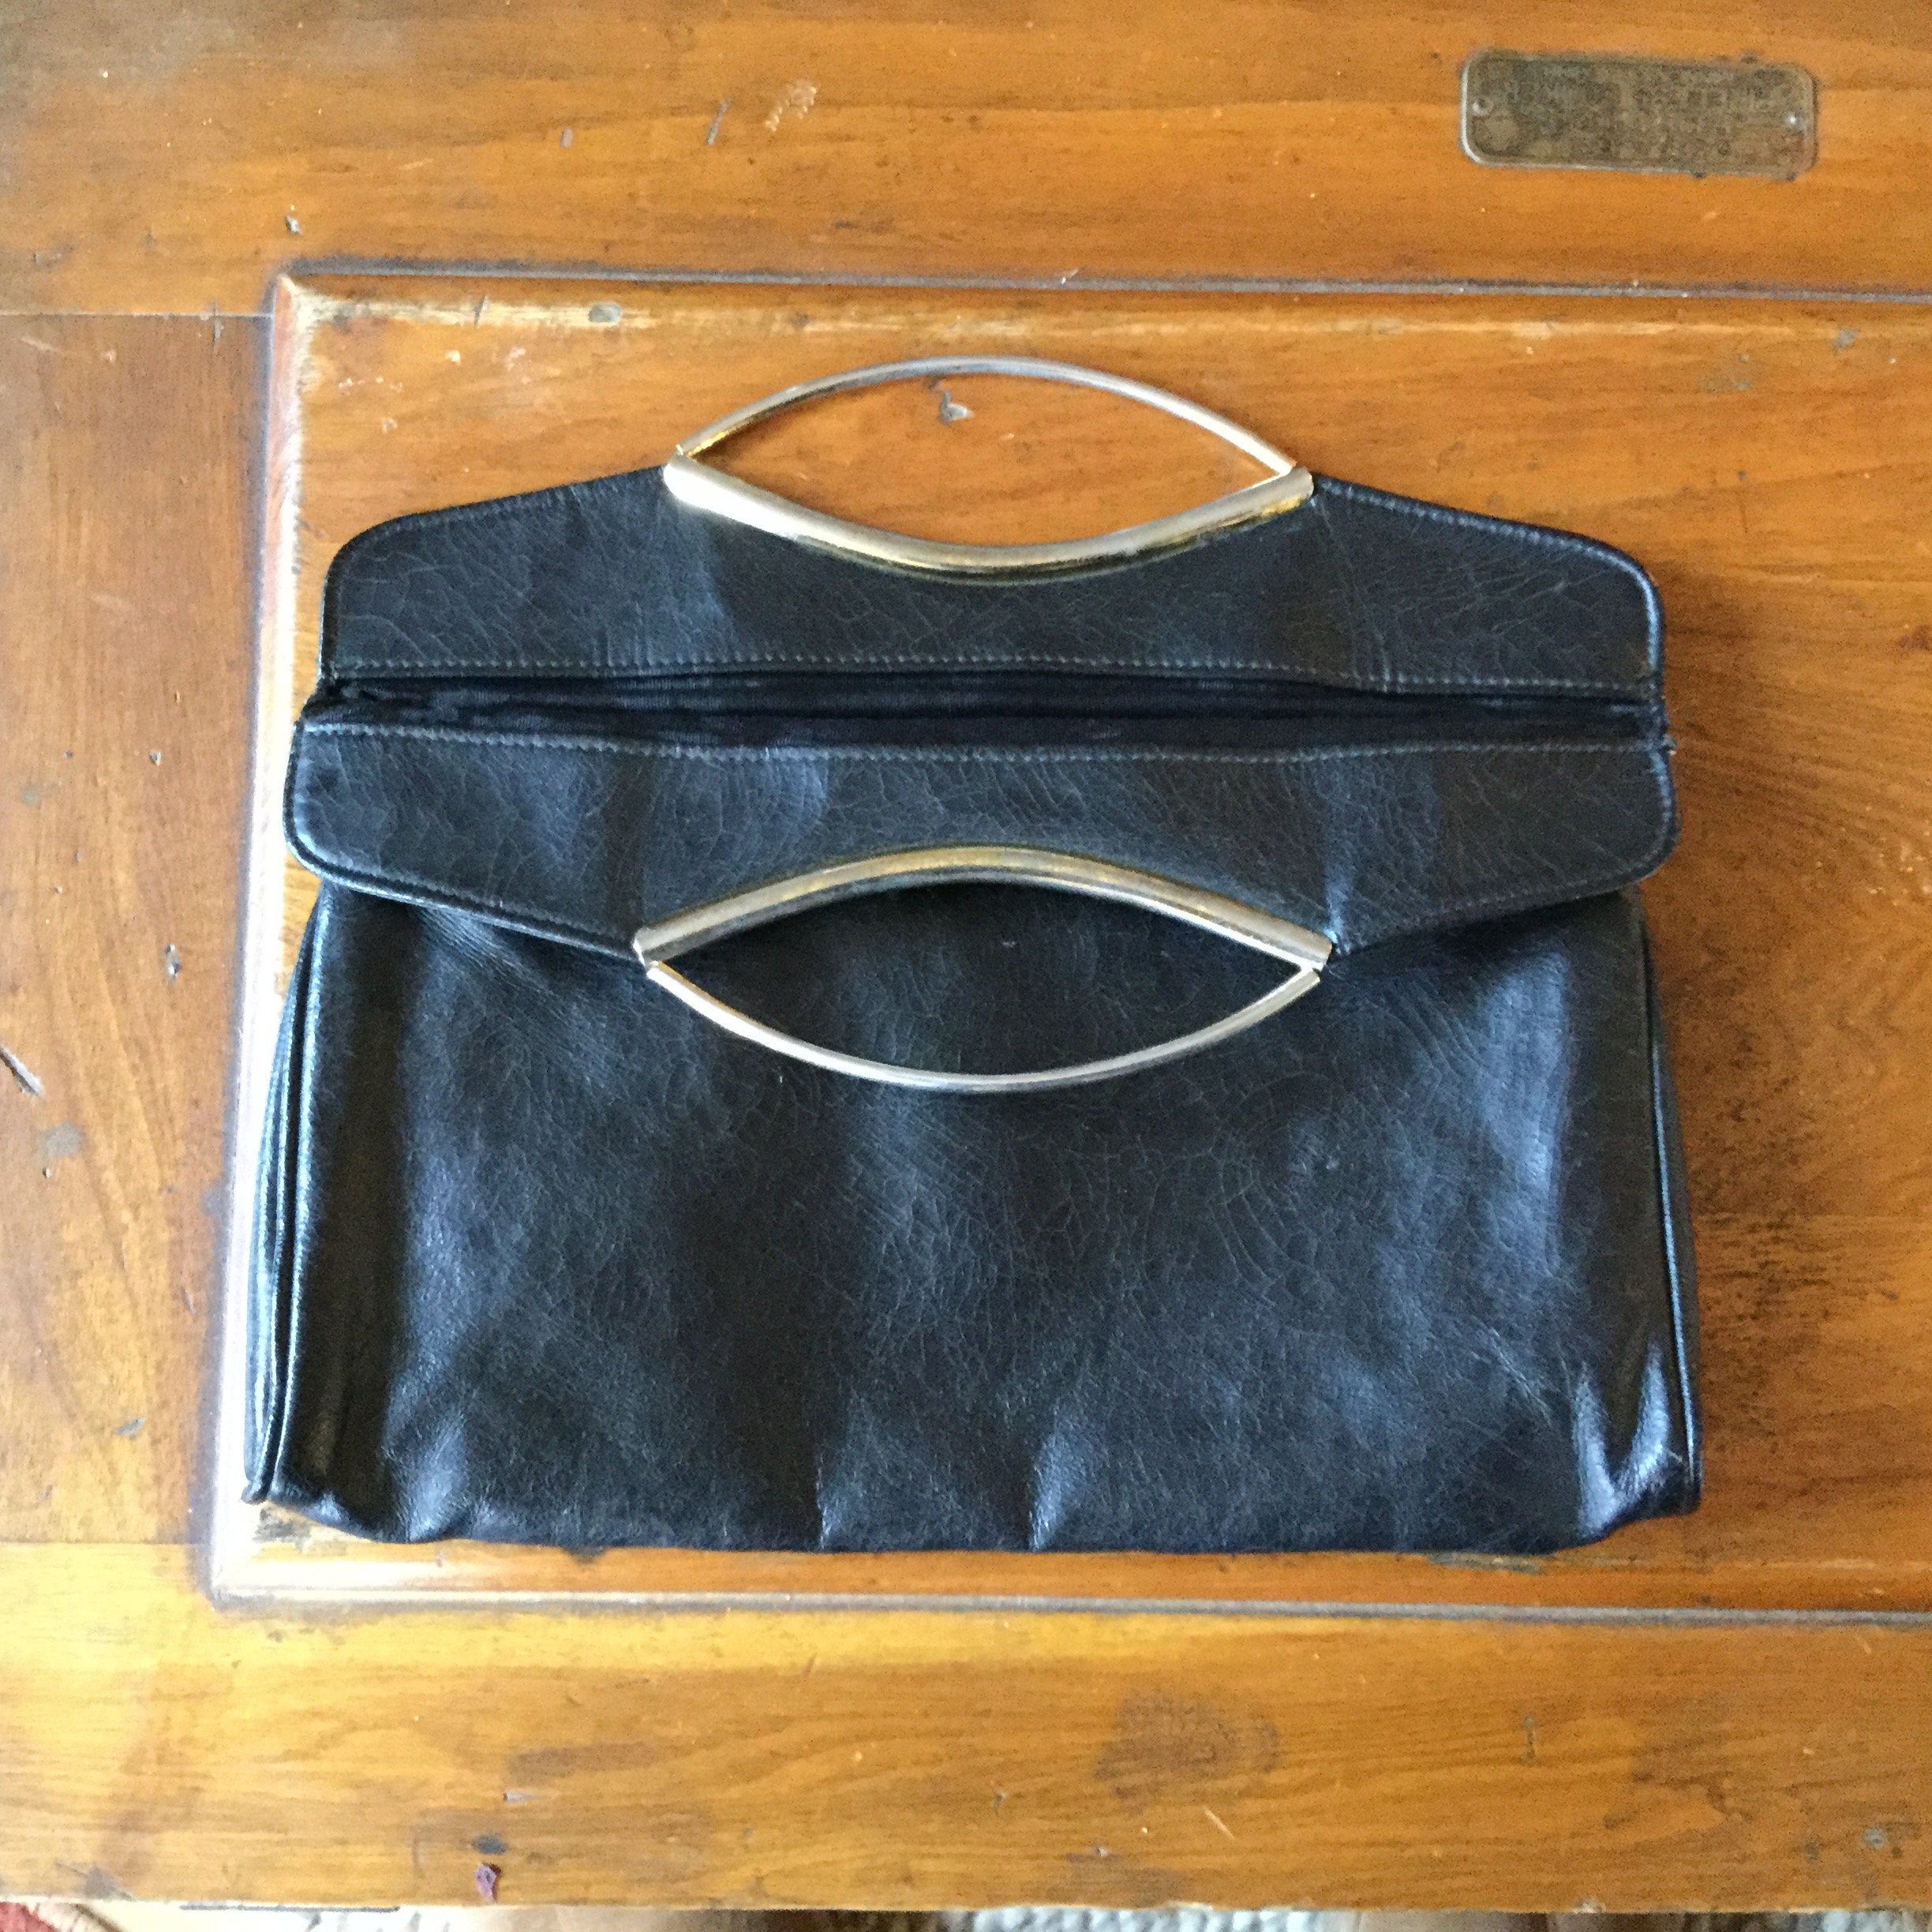 Médor leather clutch bag